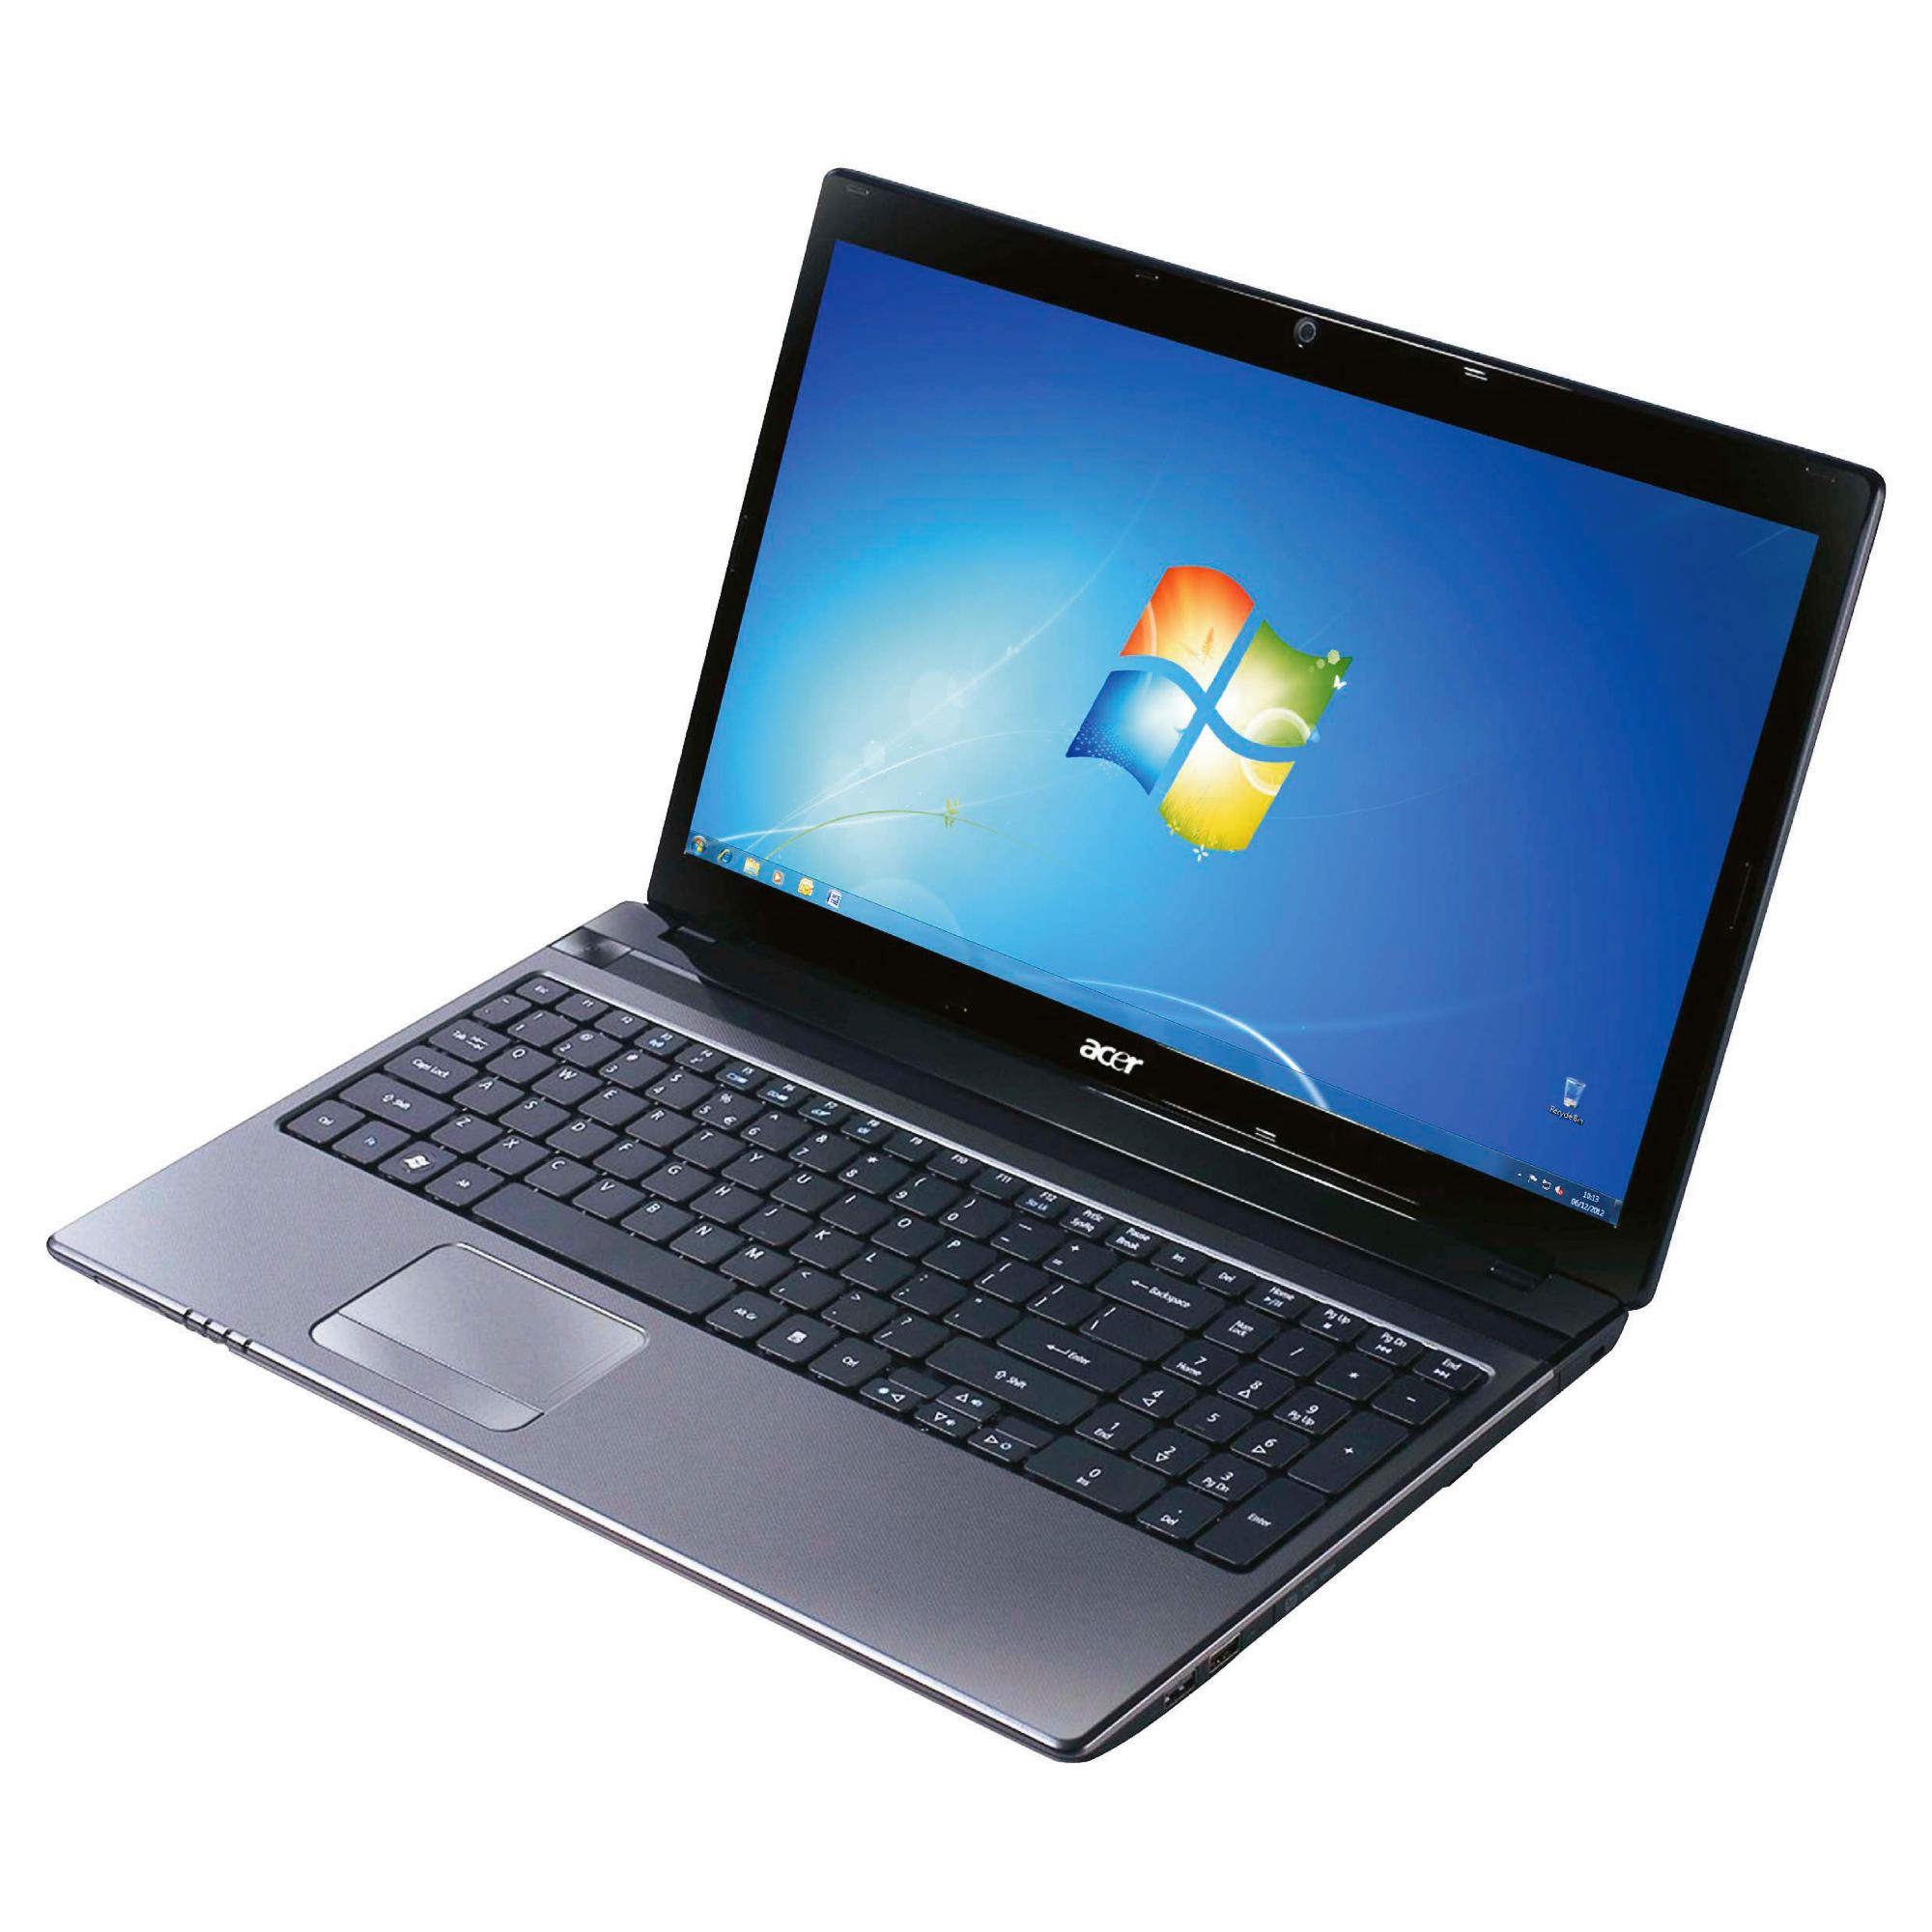 Acer Aspire 5755G 15.6-inch laptop, Intel Core i7, 6GB RAM, 750GB, Windows 7, Black